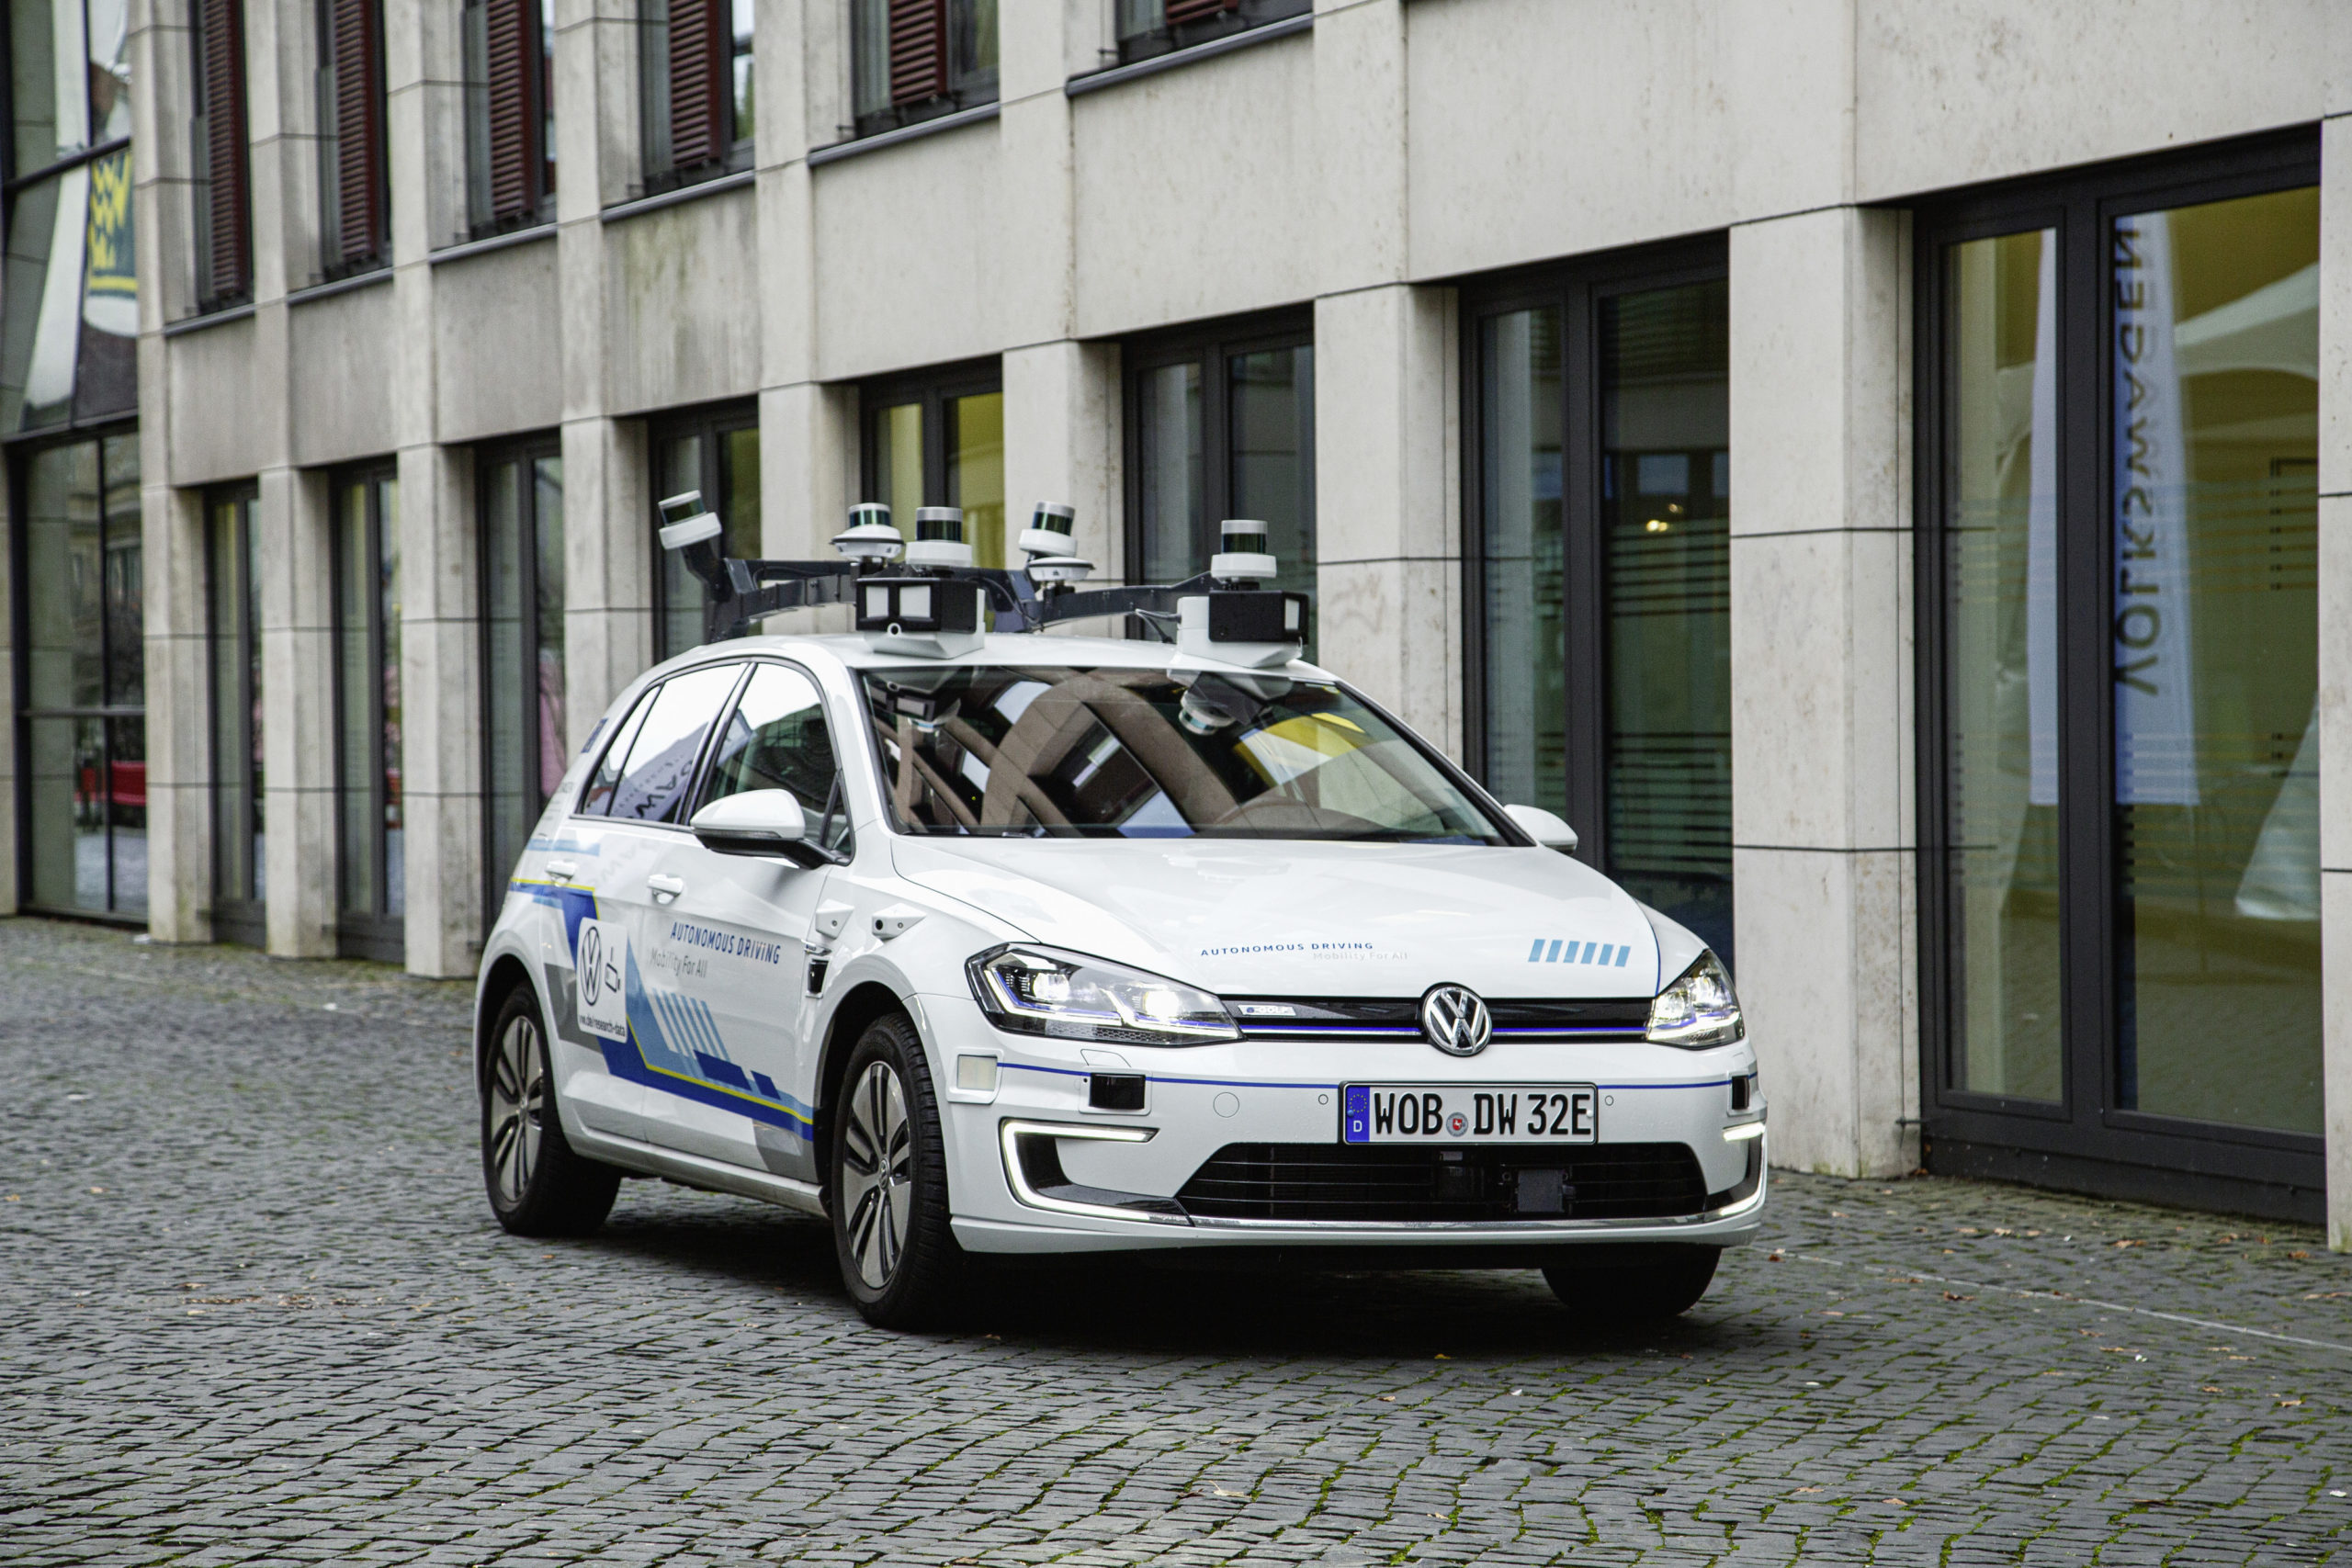 40% of Belgian drivers see no benefit in autonomous car